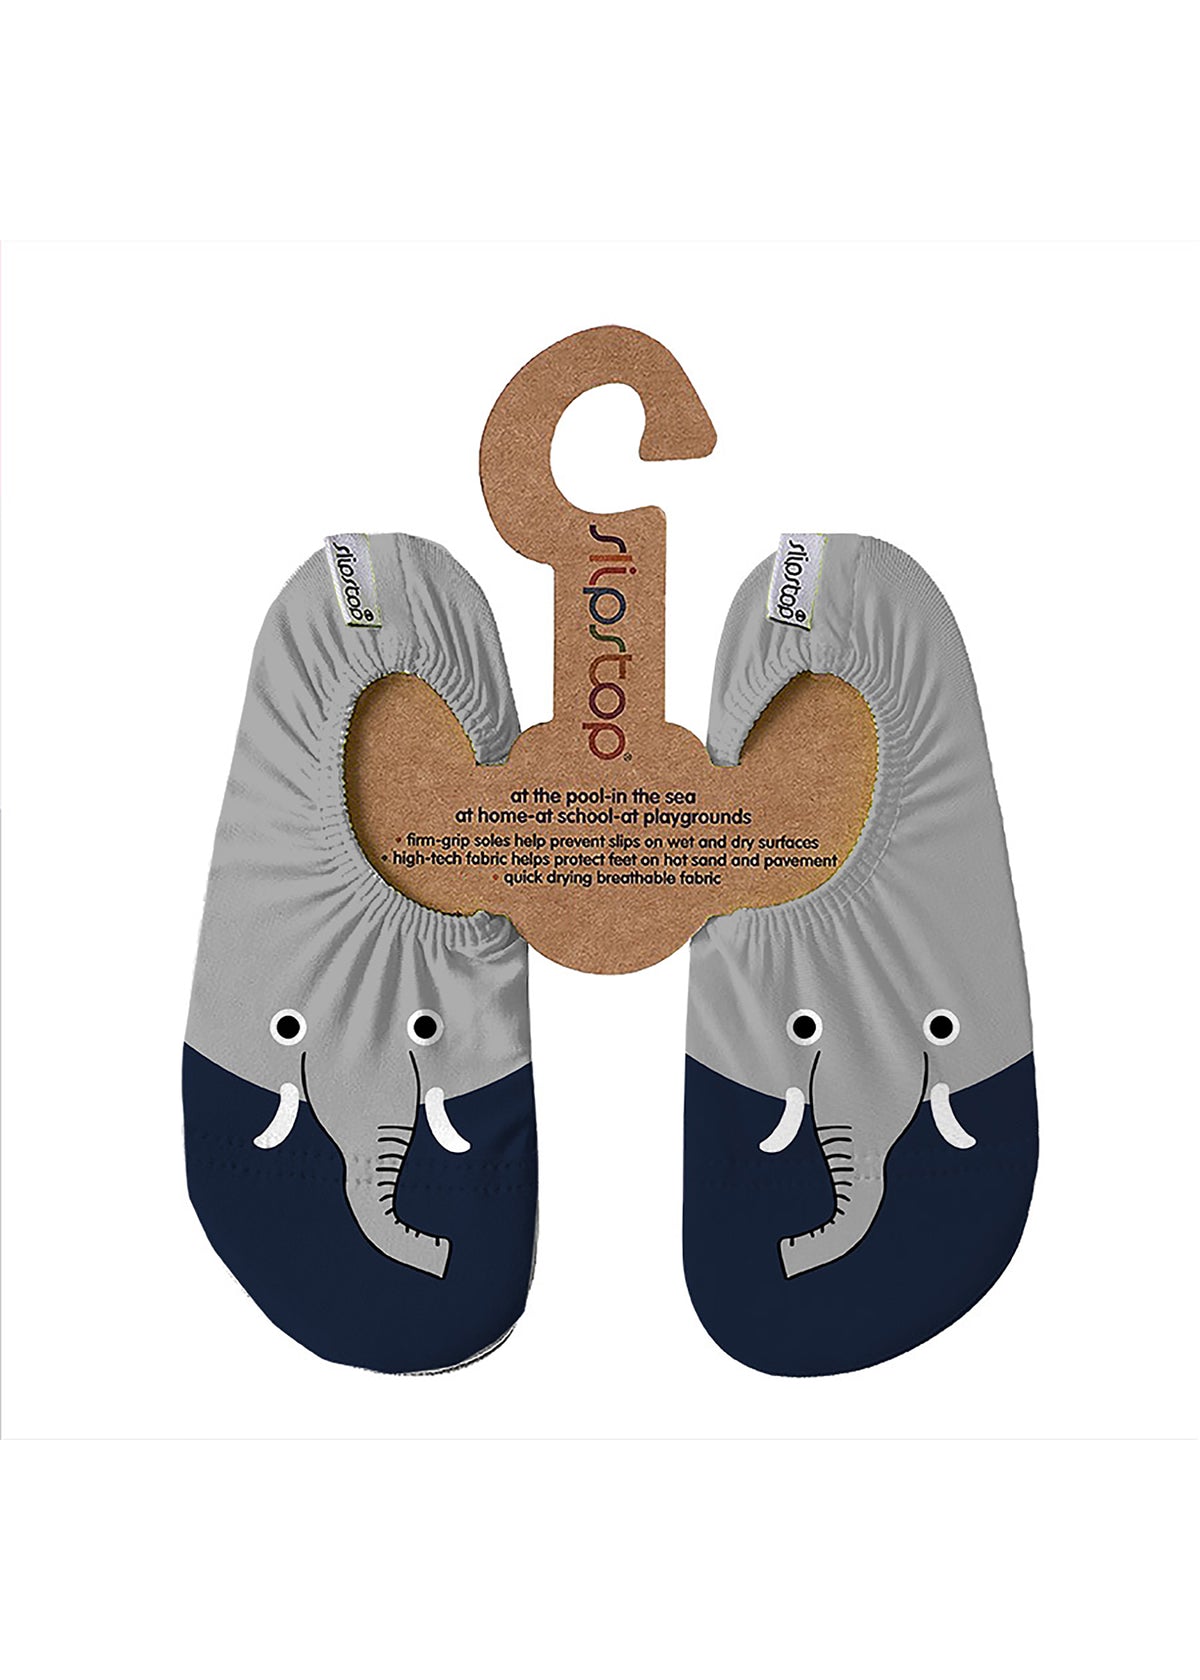 Children's slippers - Mitoz, elephant, gray-blue